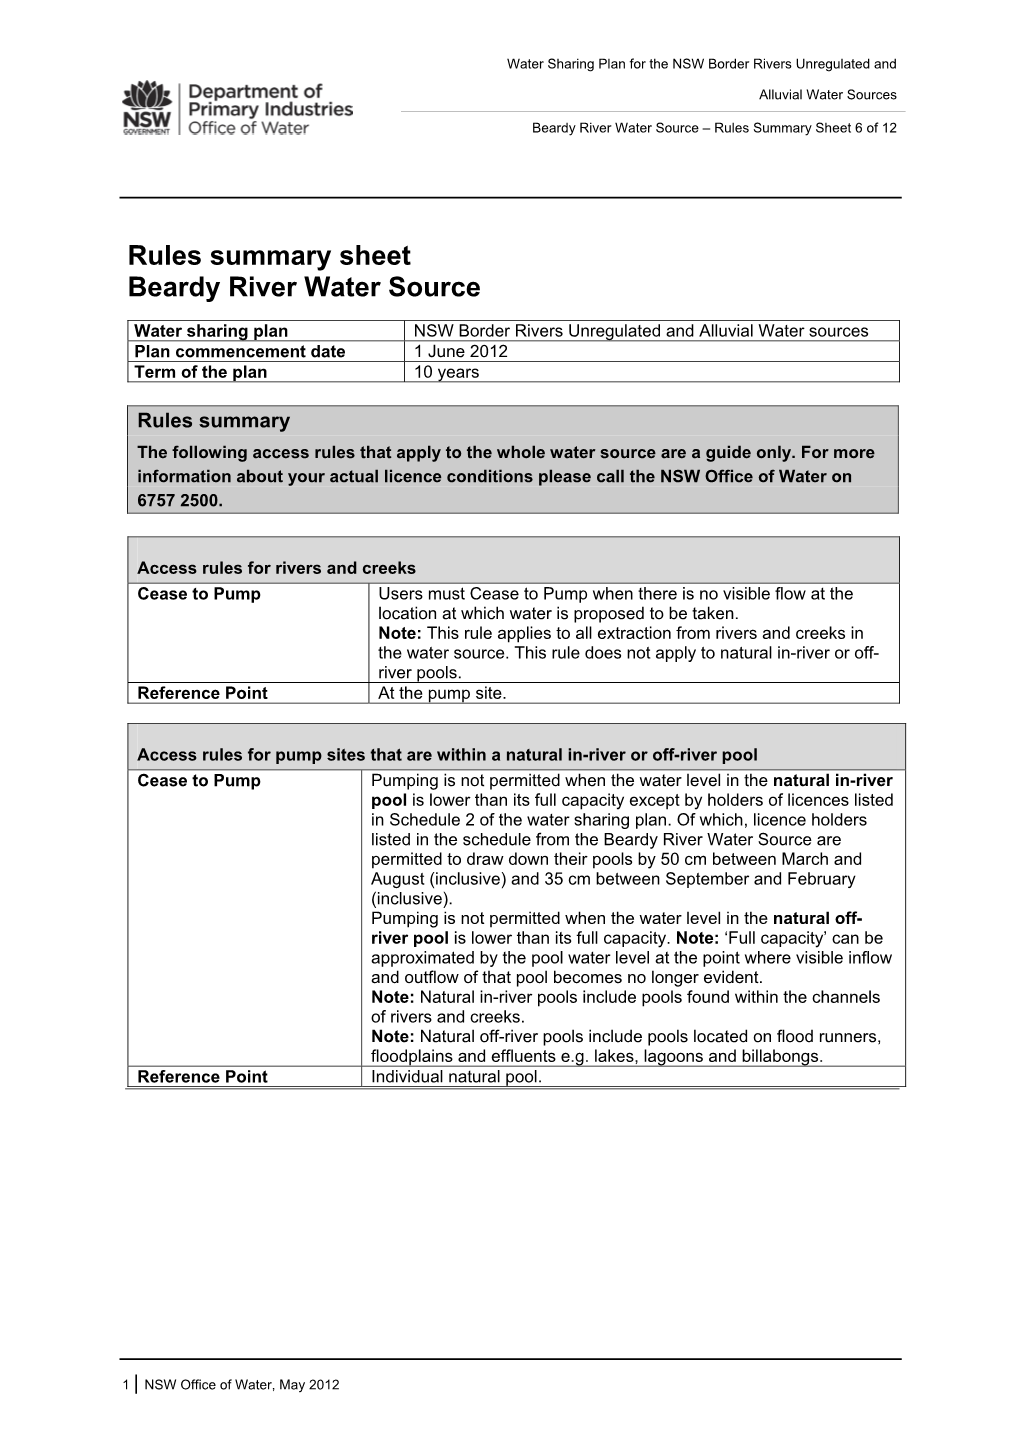 Rules Summary Sheet Beardy River Water Source